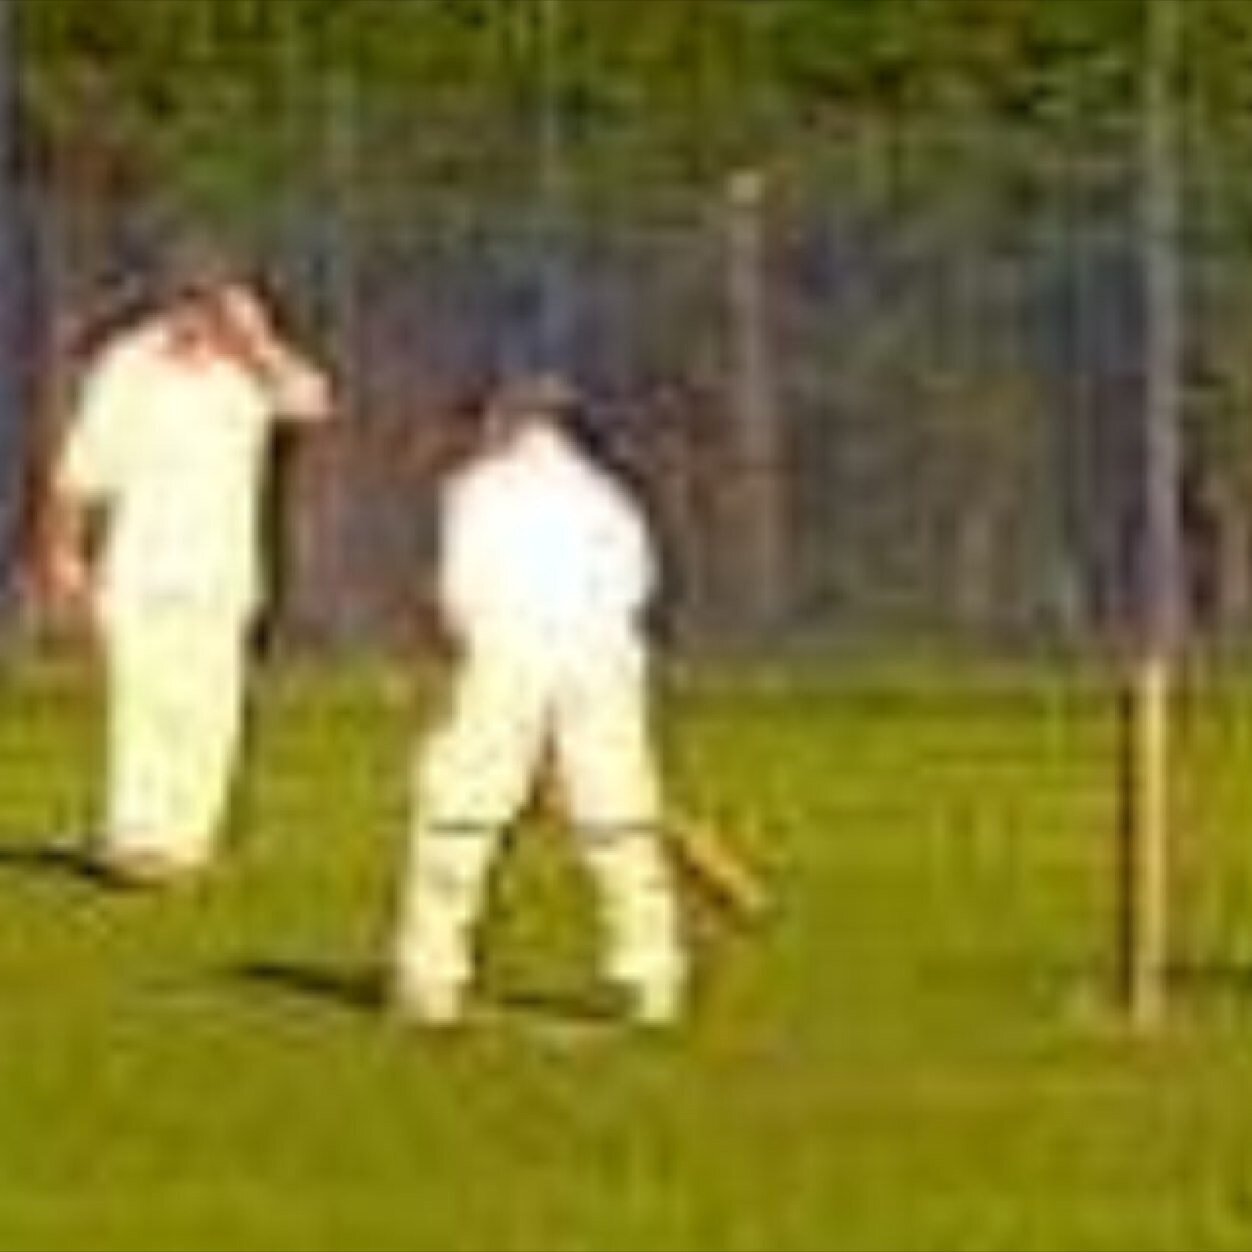 Milnrow cricket club